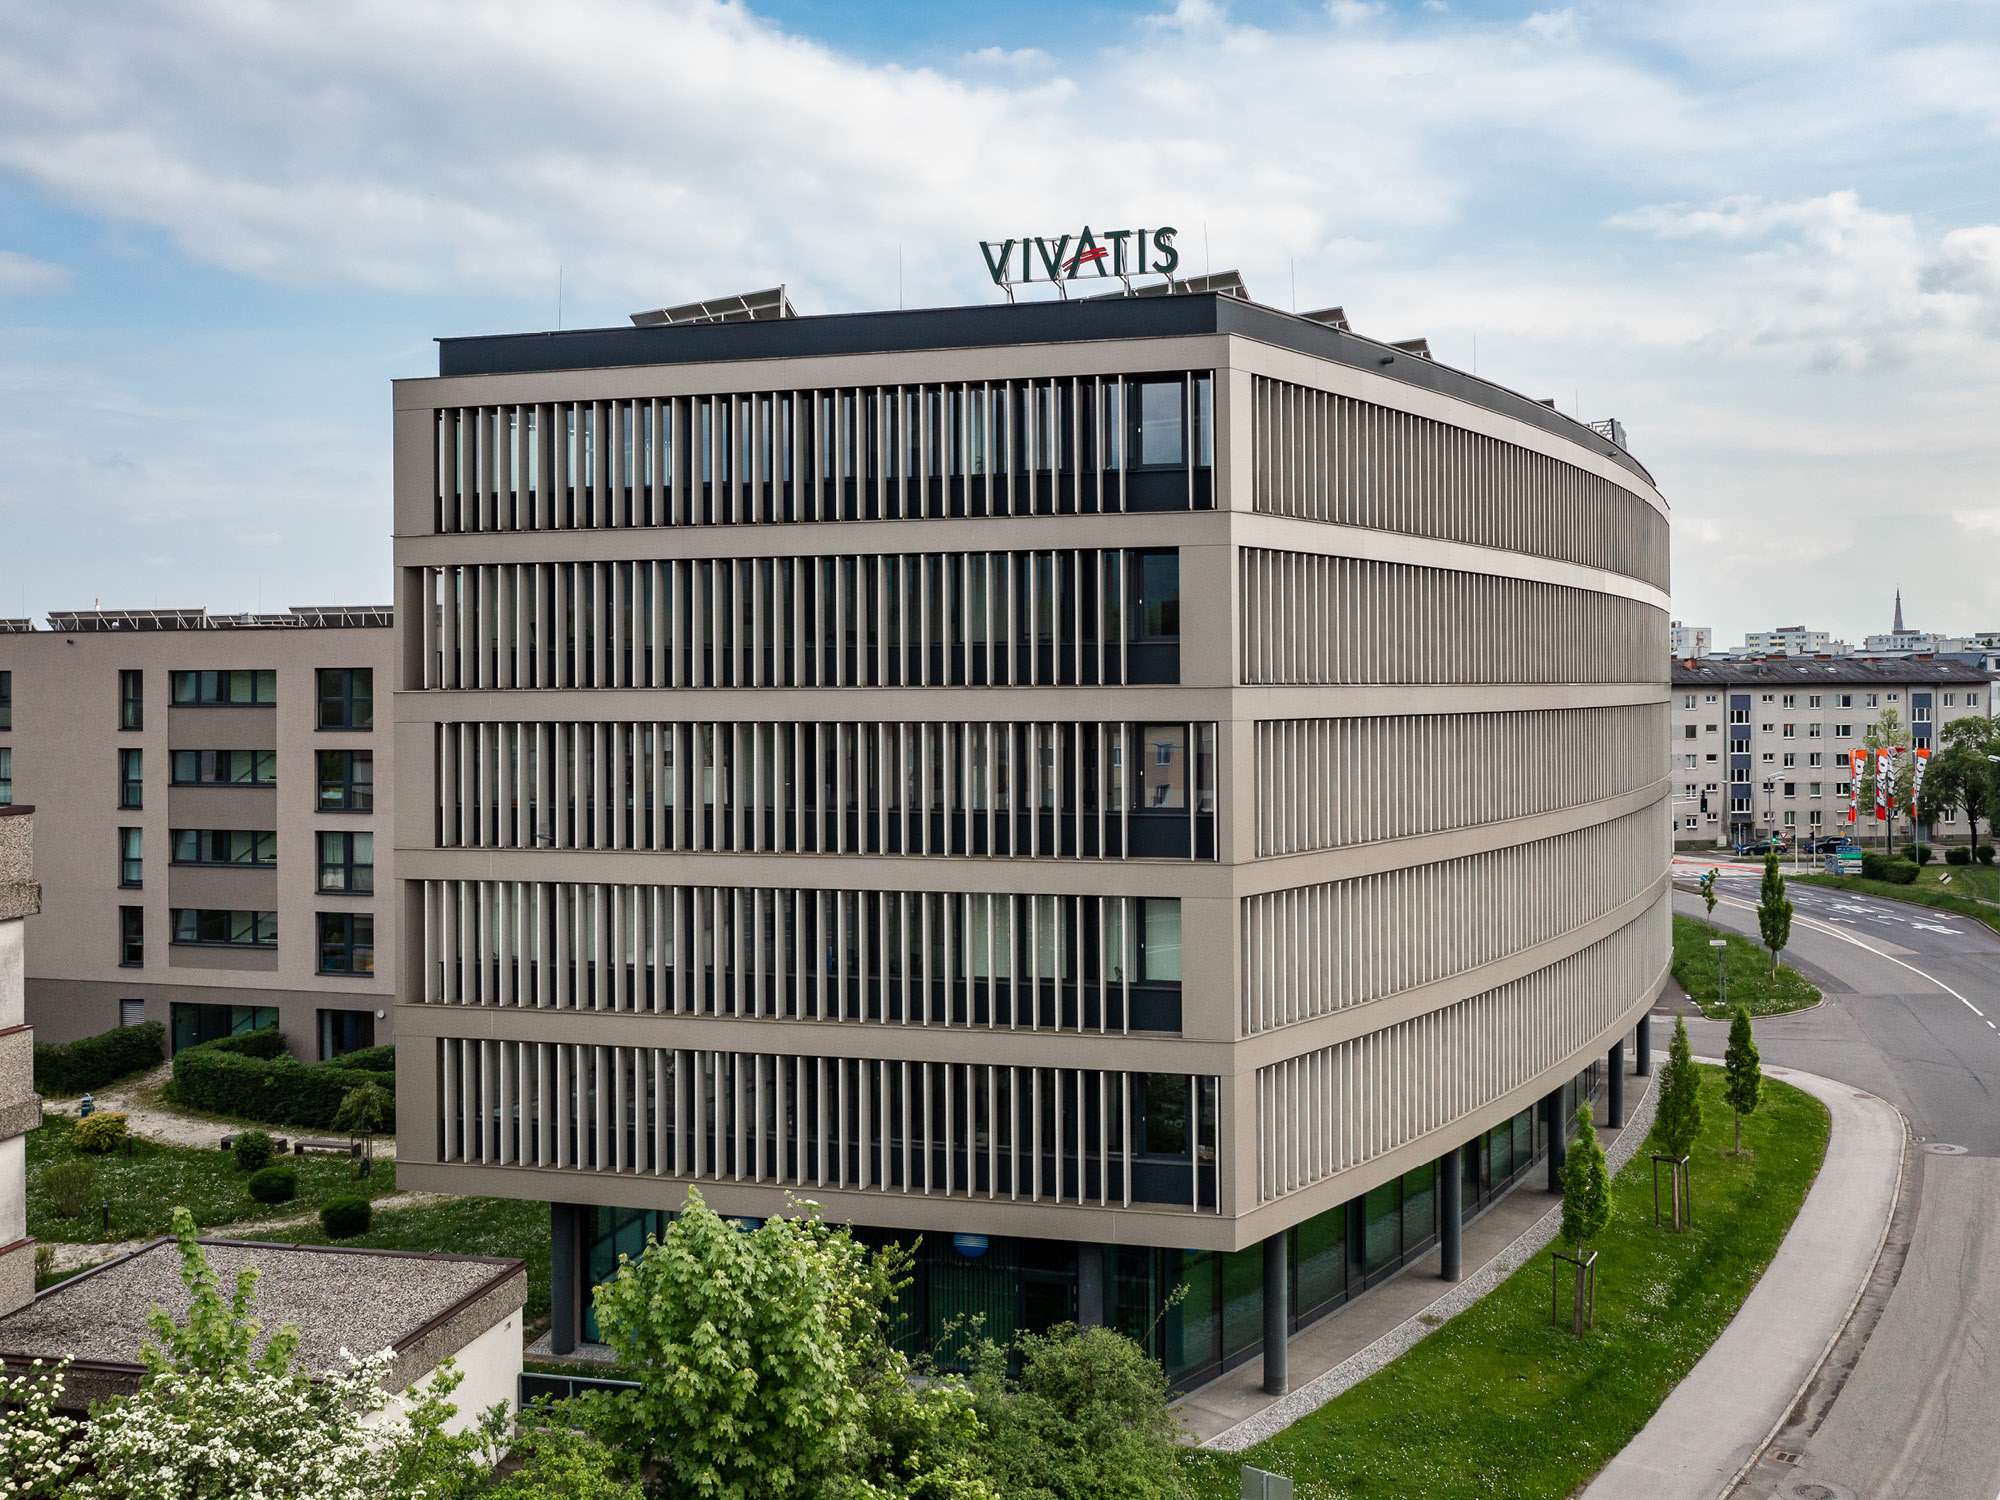 VIVATIS – the strategic management holding based in Linz